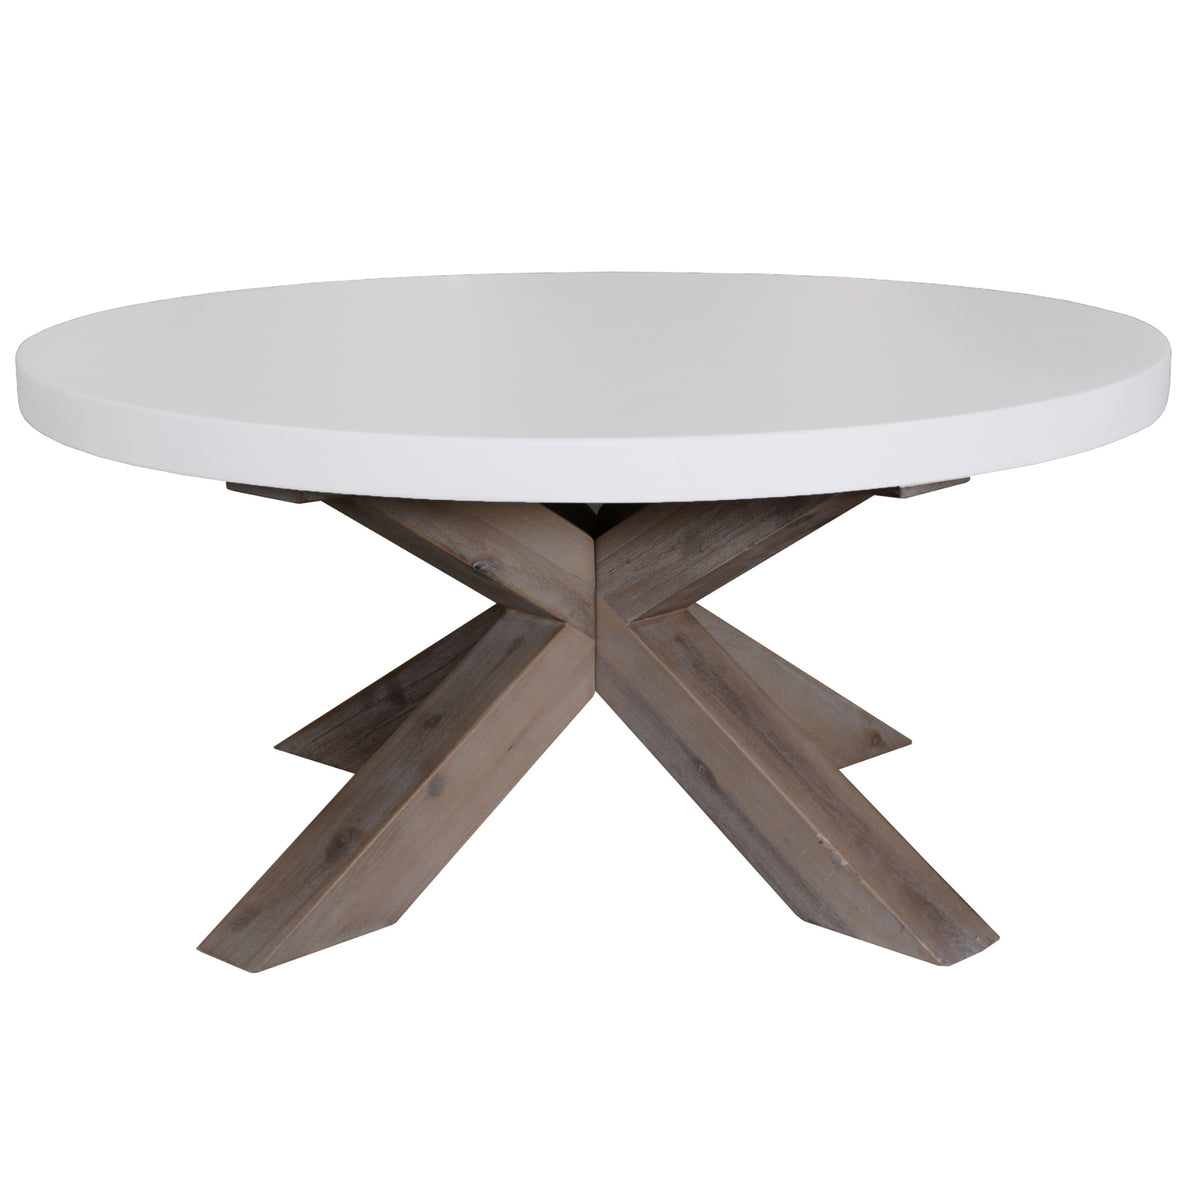 Stony Coffee Table with Concrete Top White 85cm - Round